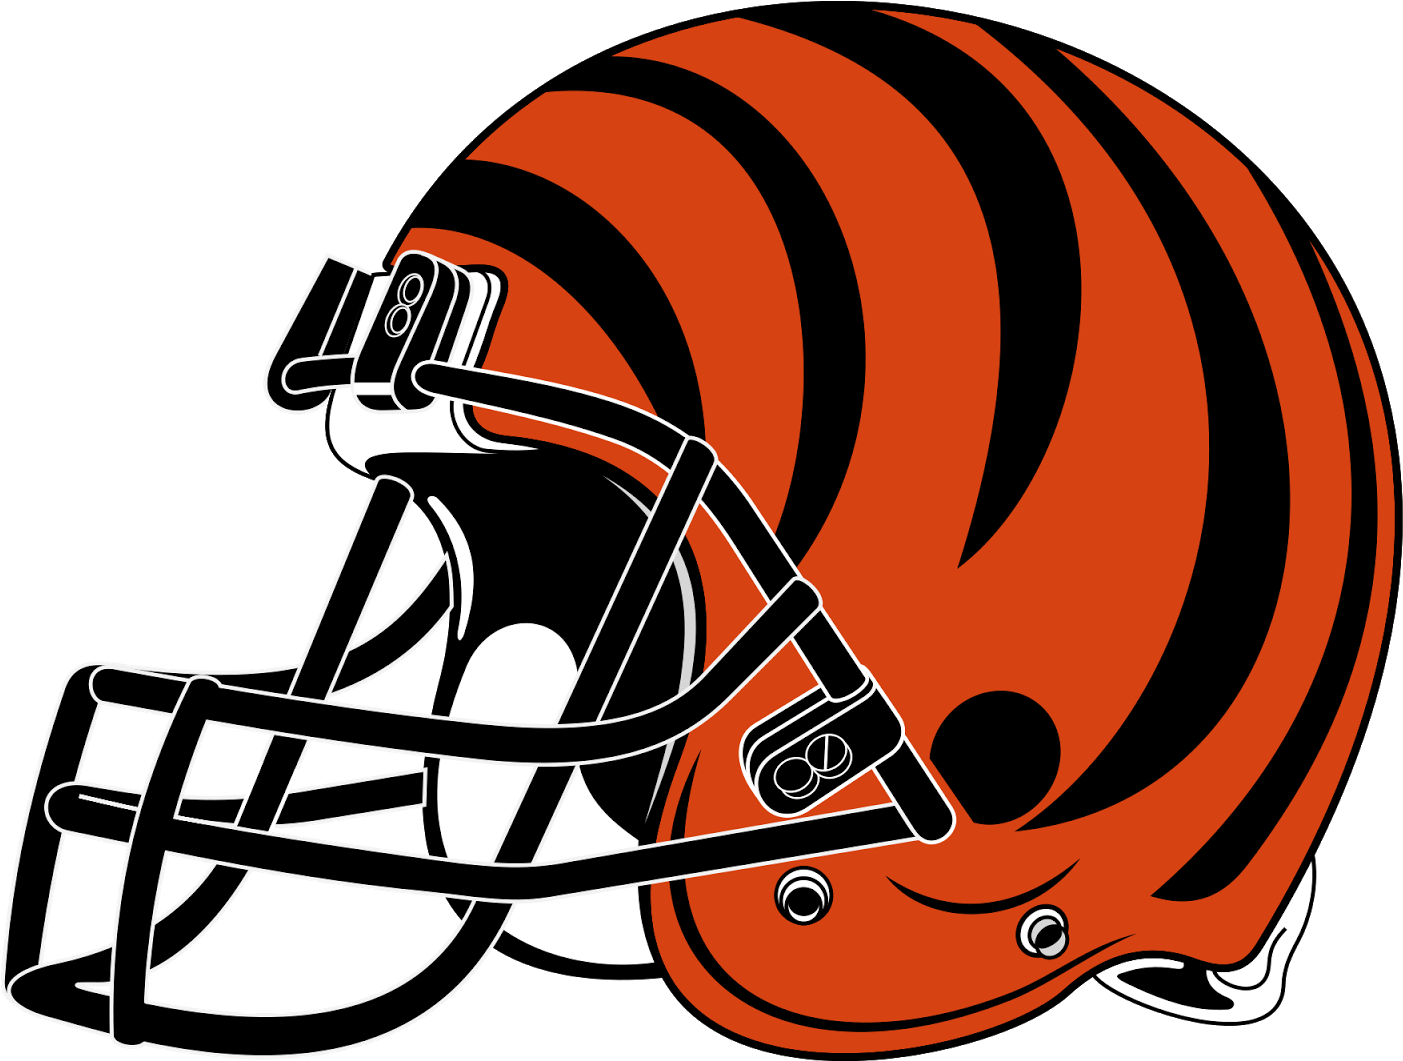 A Football Helmet With A Striped Orange And Black Striped Helmet